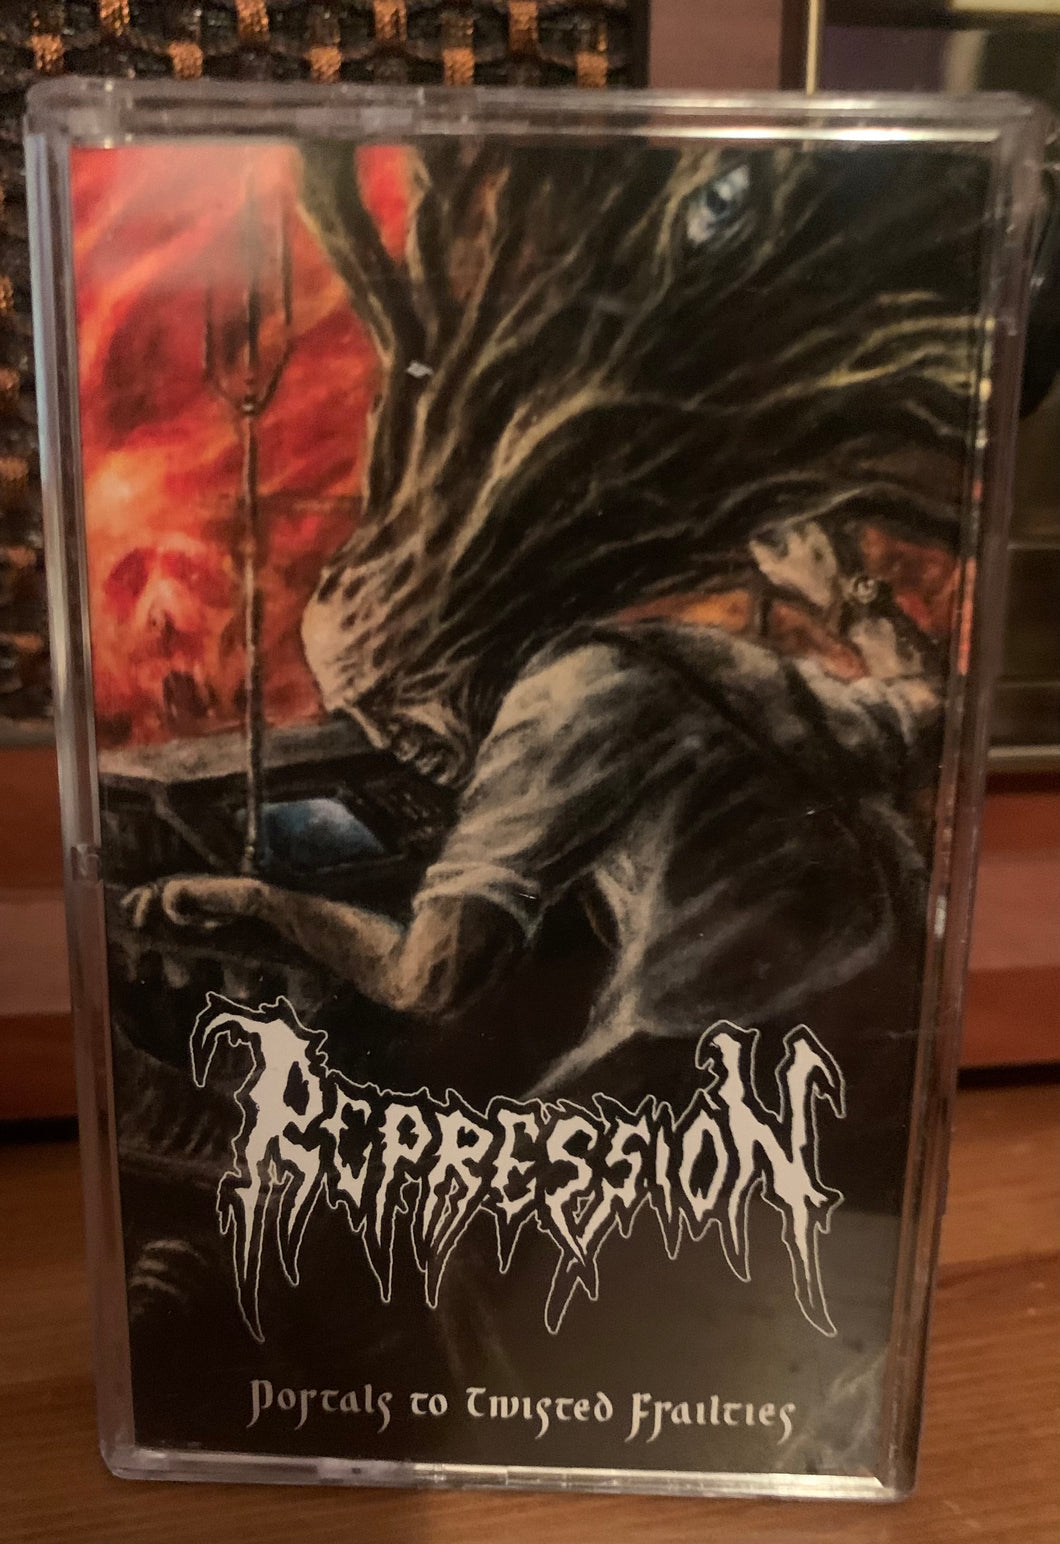 Repression - Portal To Twisted Frailties MC